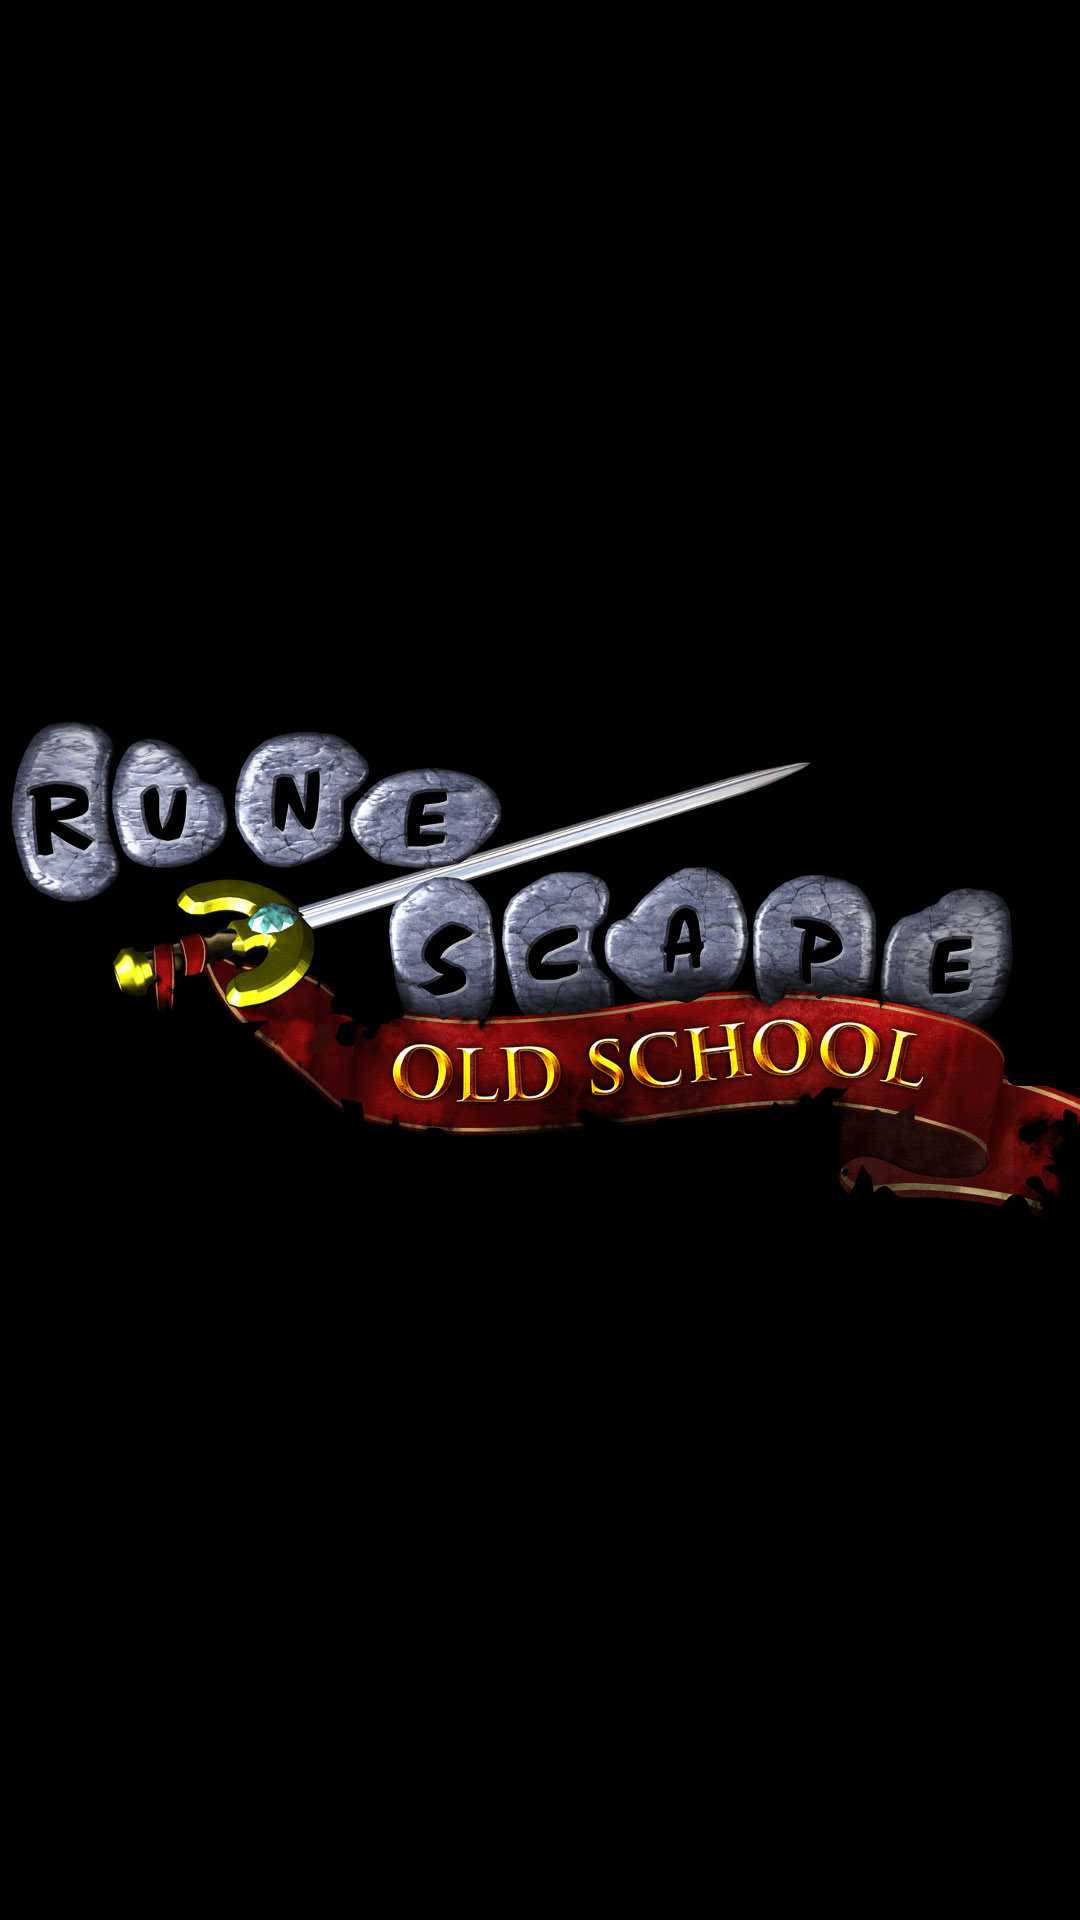 Old School Runescape - Vintage Video Game Logo